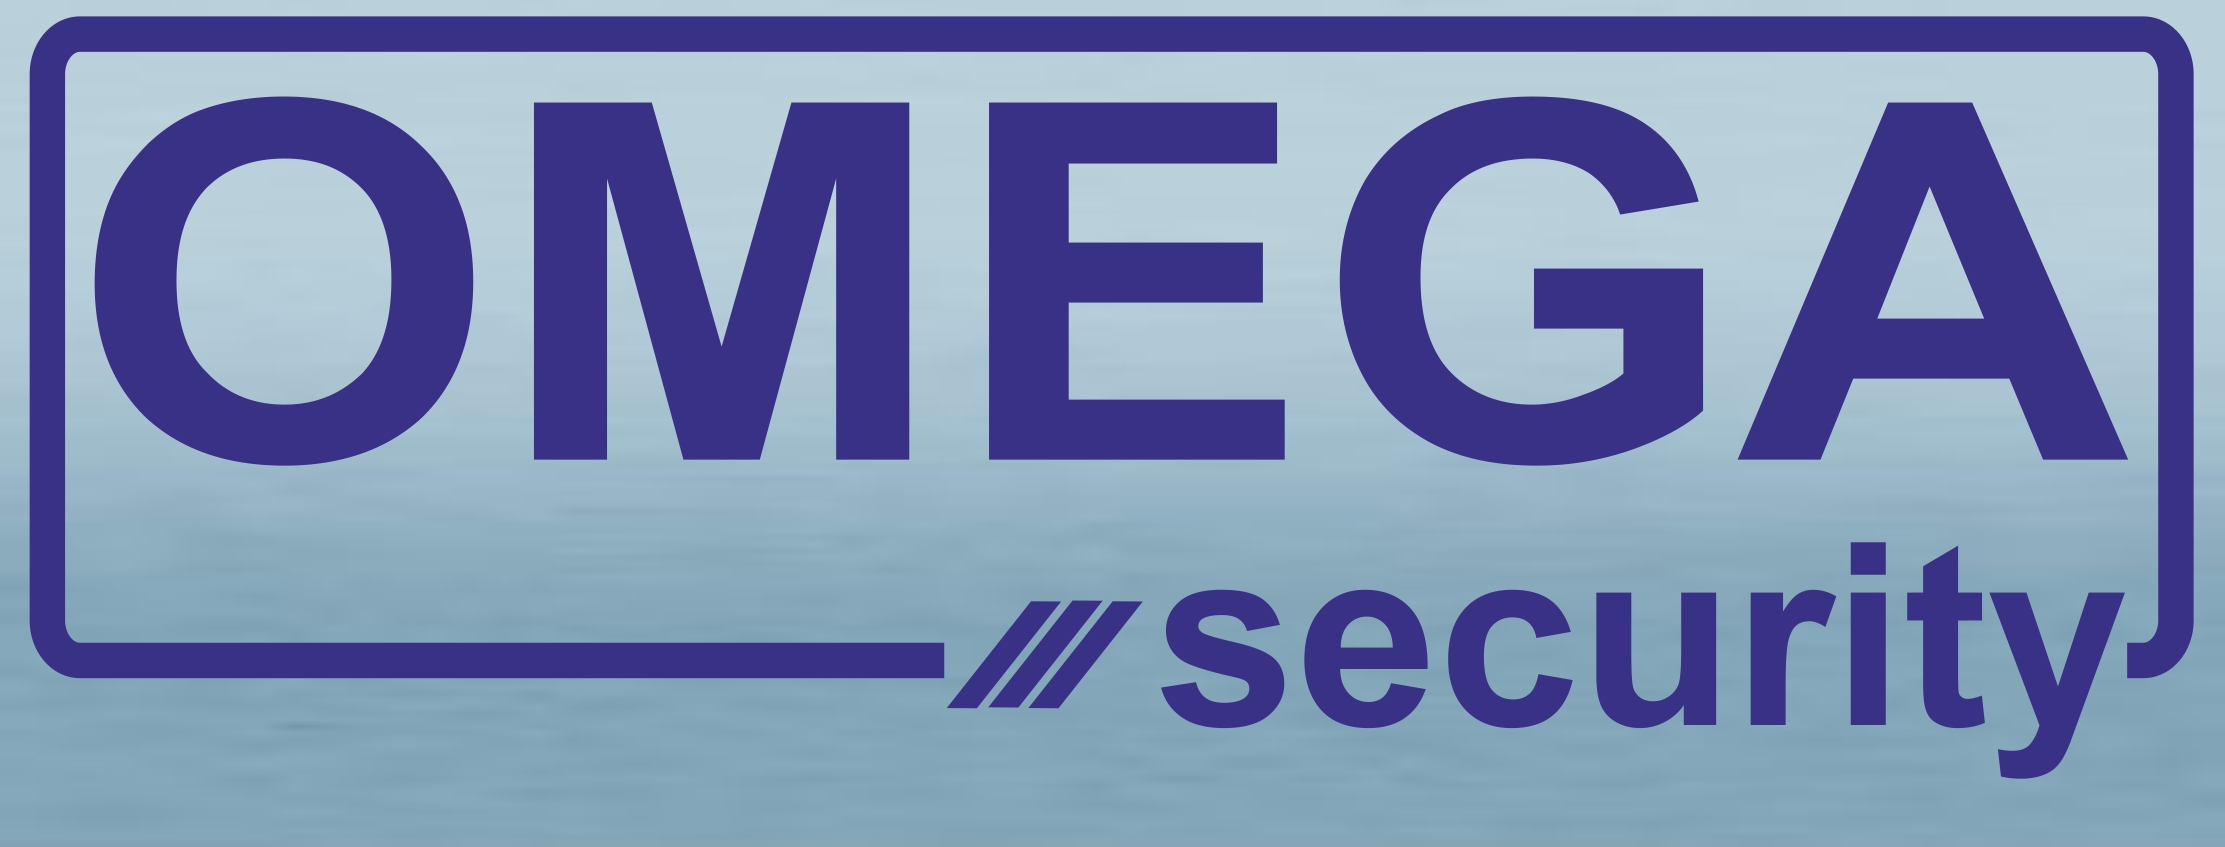 Omega Securities Logo photo - 1